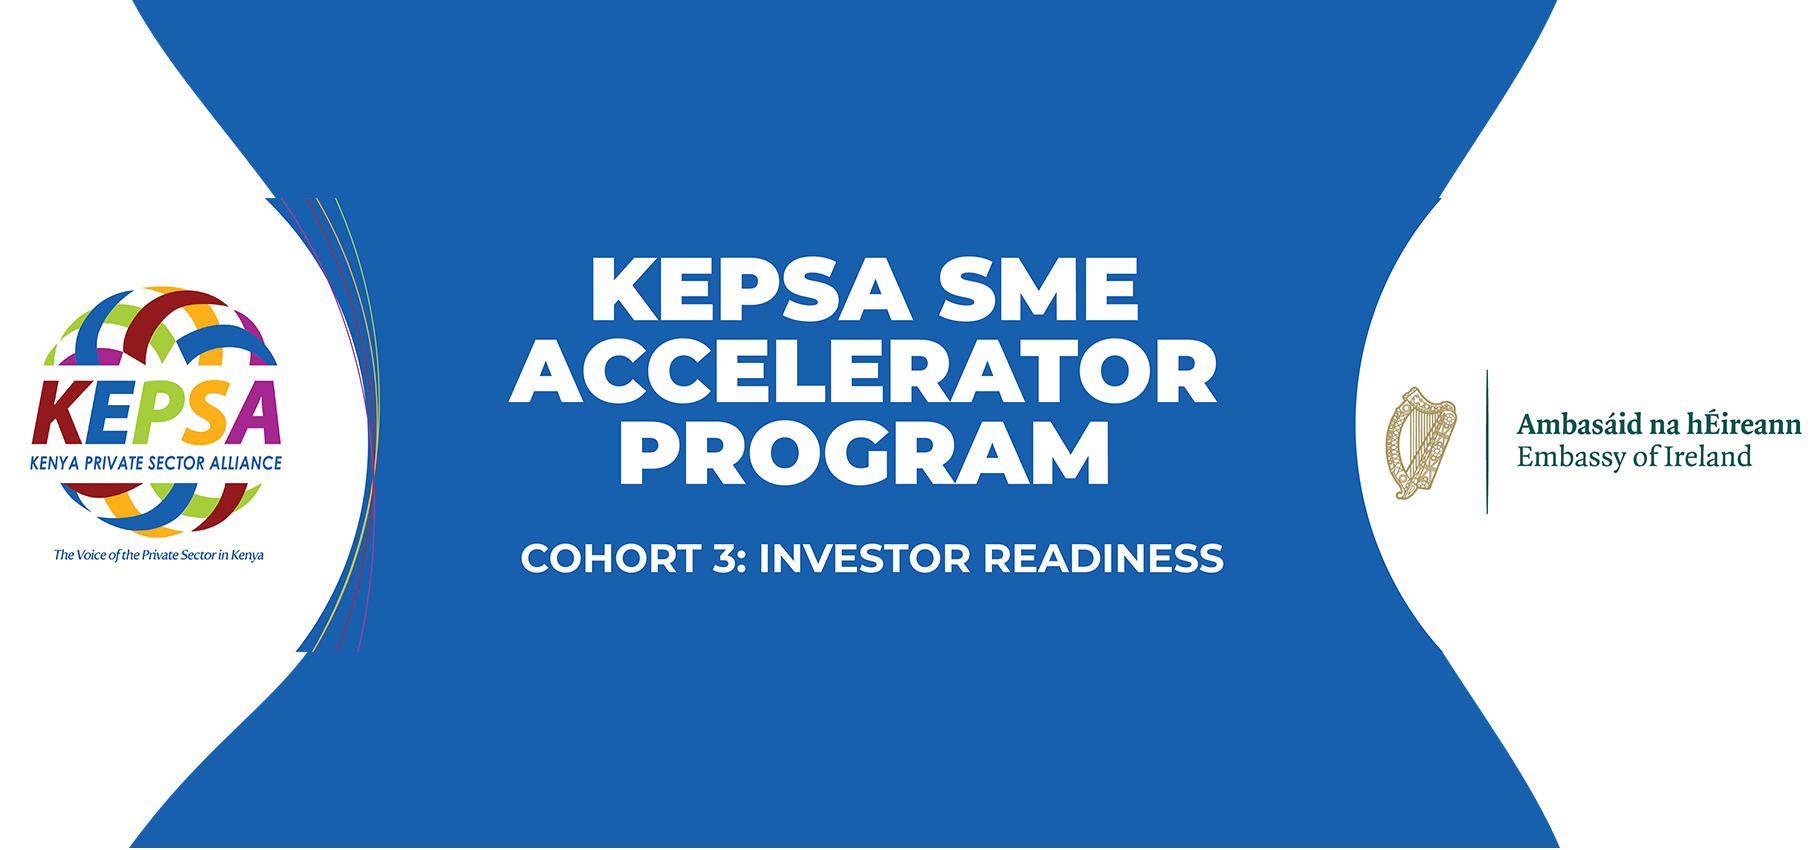 KEPSA SME’s Accelerator Program 2022 for young Kenyan Entrepreneurs